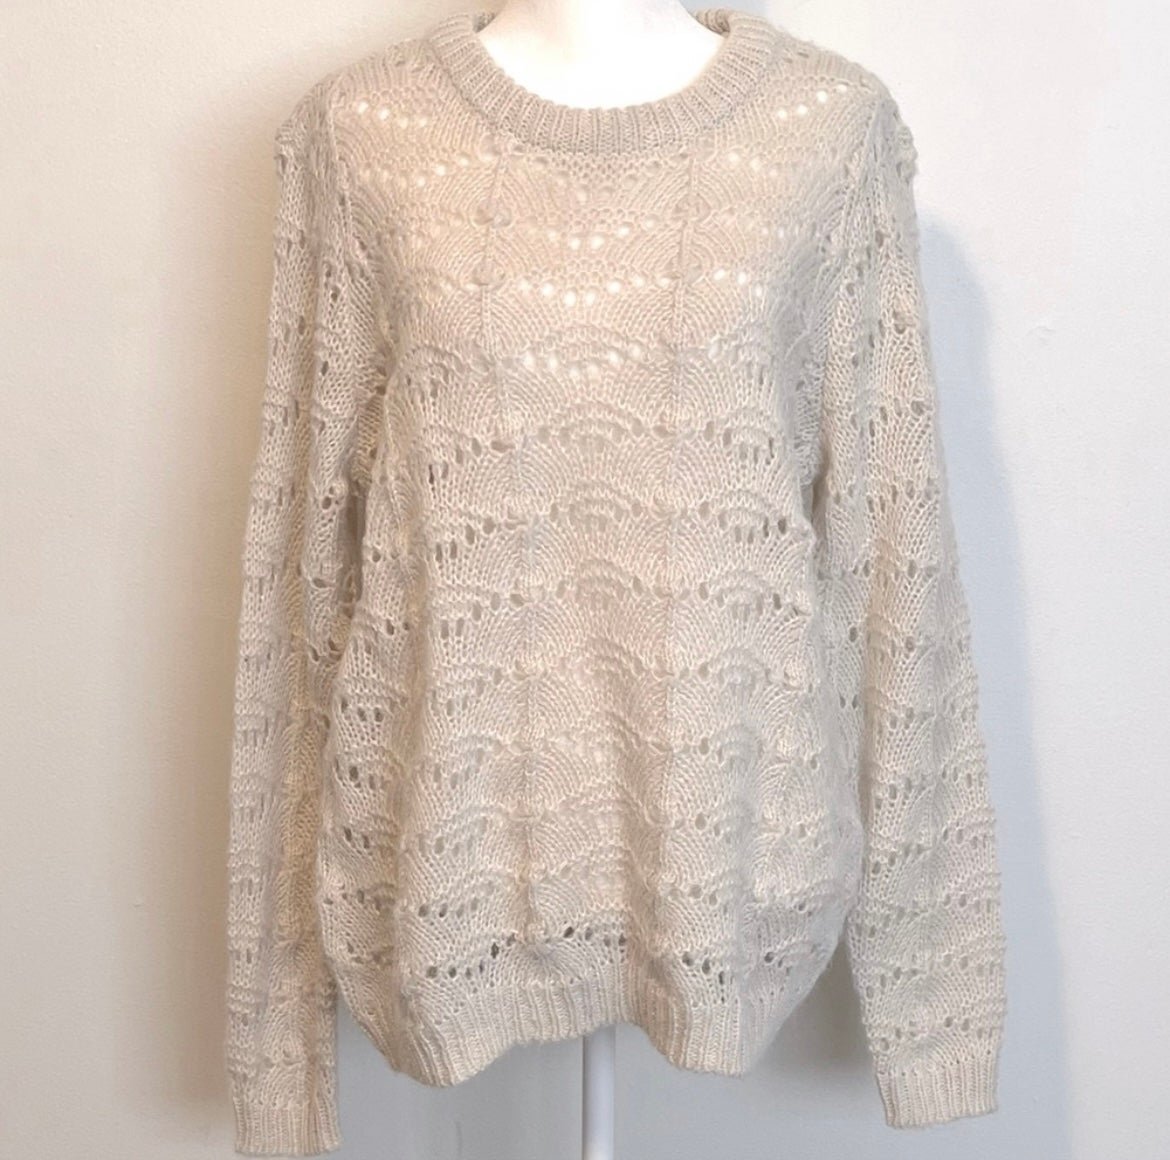 Simple Vero Moda lace knit cream sweater OLsCwjWpB Factory Price